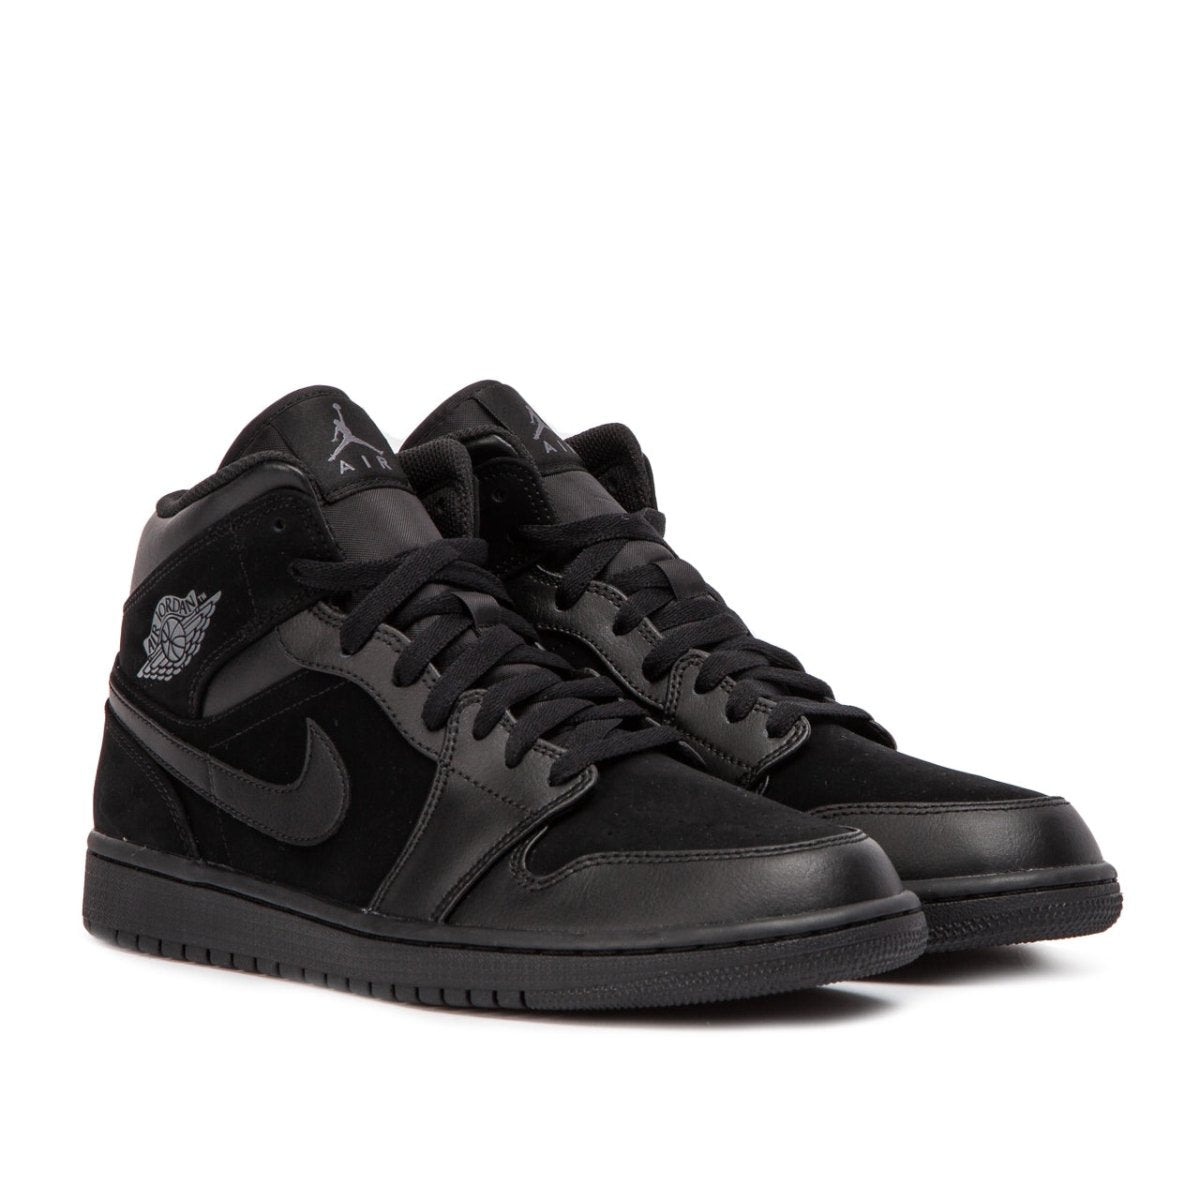 Nike Air Jordan 1 MID (Schwarz / Grau)  - Allike Store